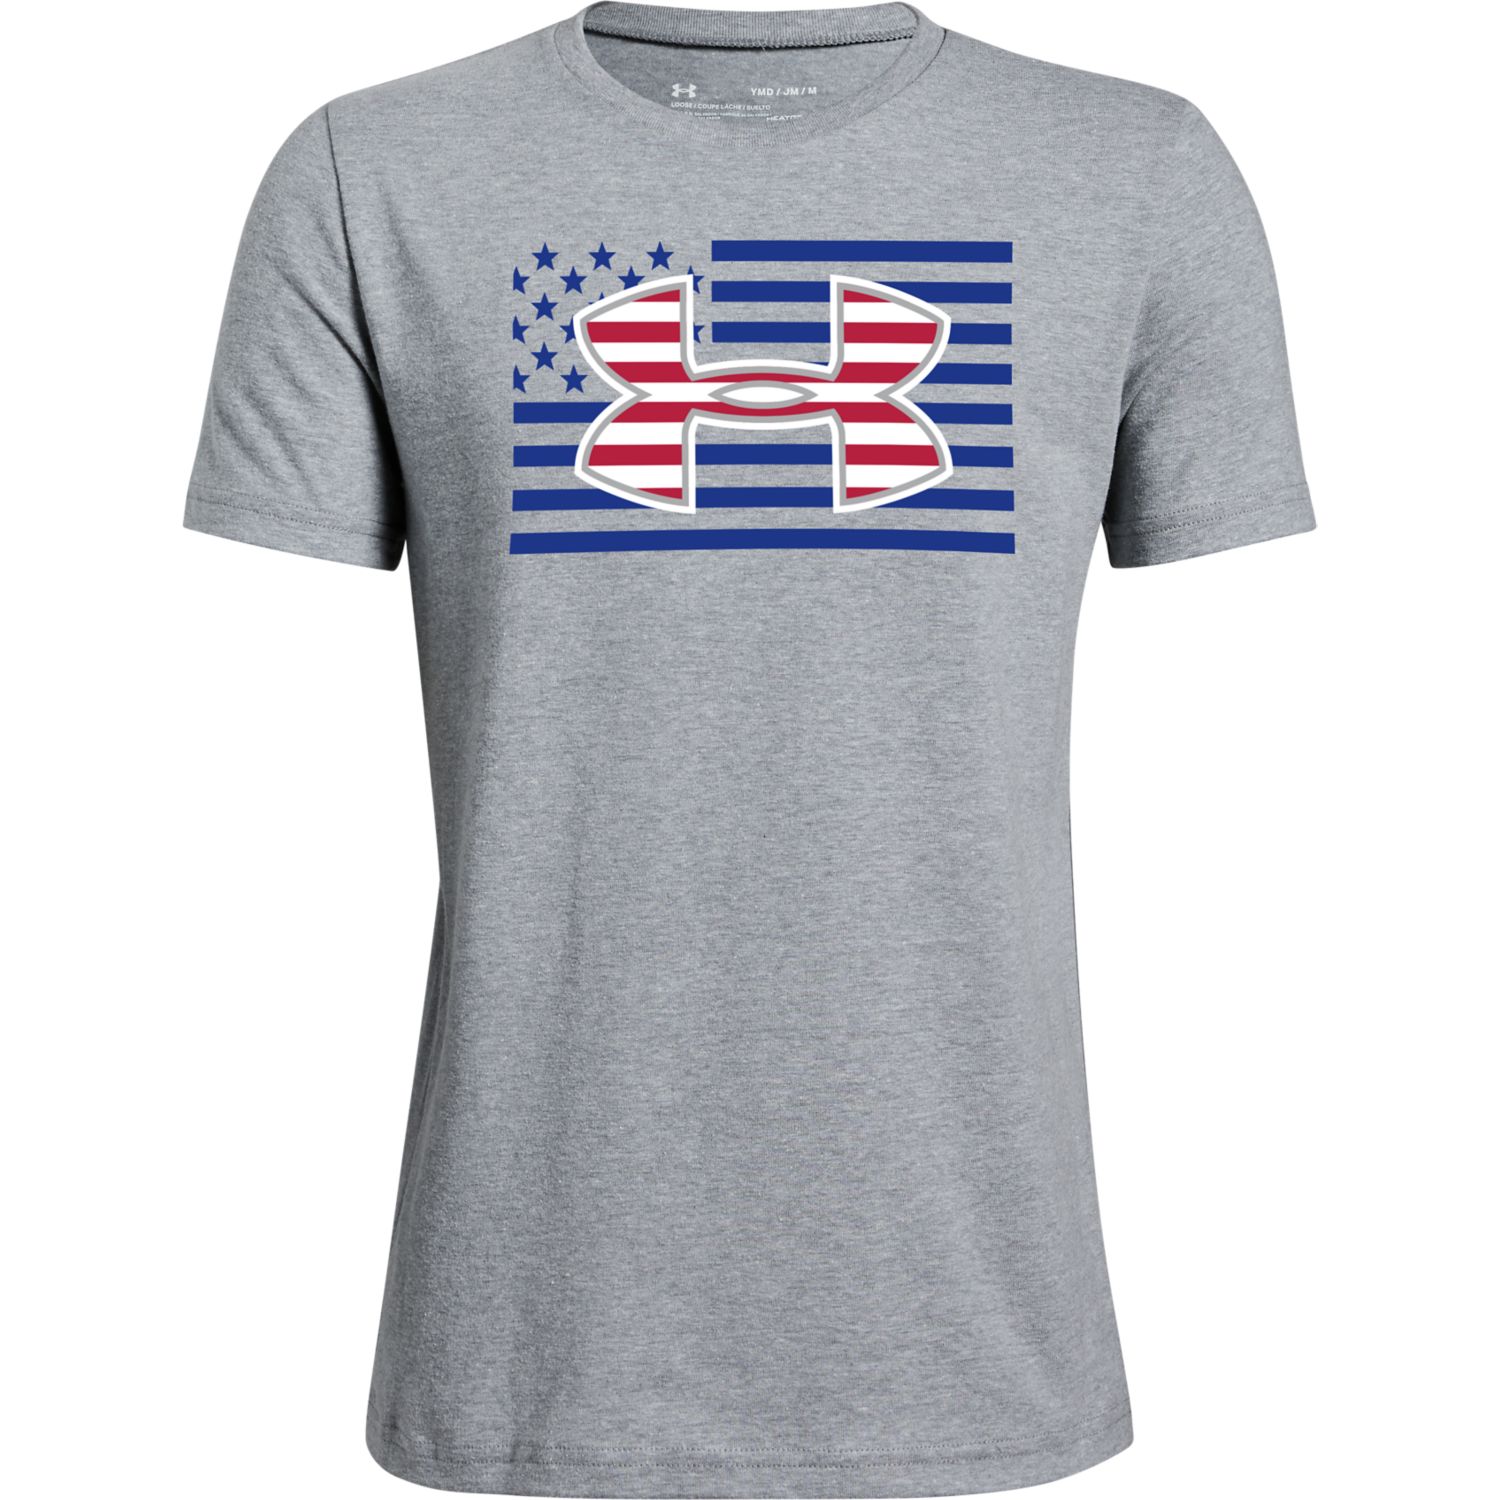 Kohls Patriotic Shirts Off 75 Free Shipping - obey t shirts roblox rldm